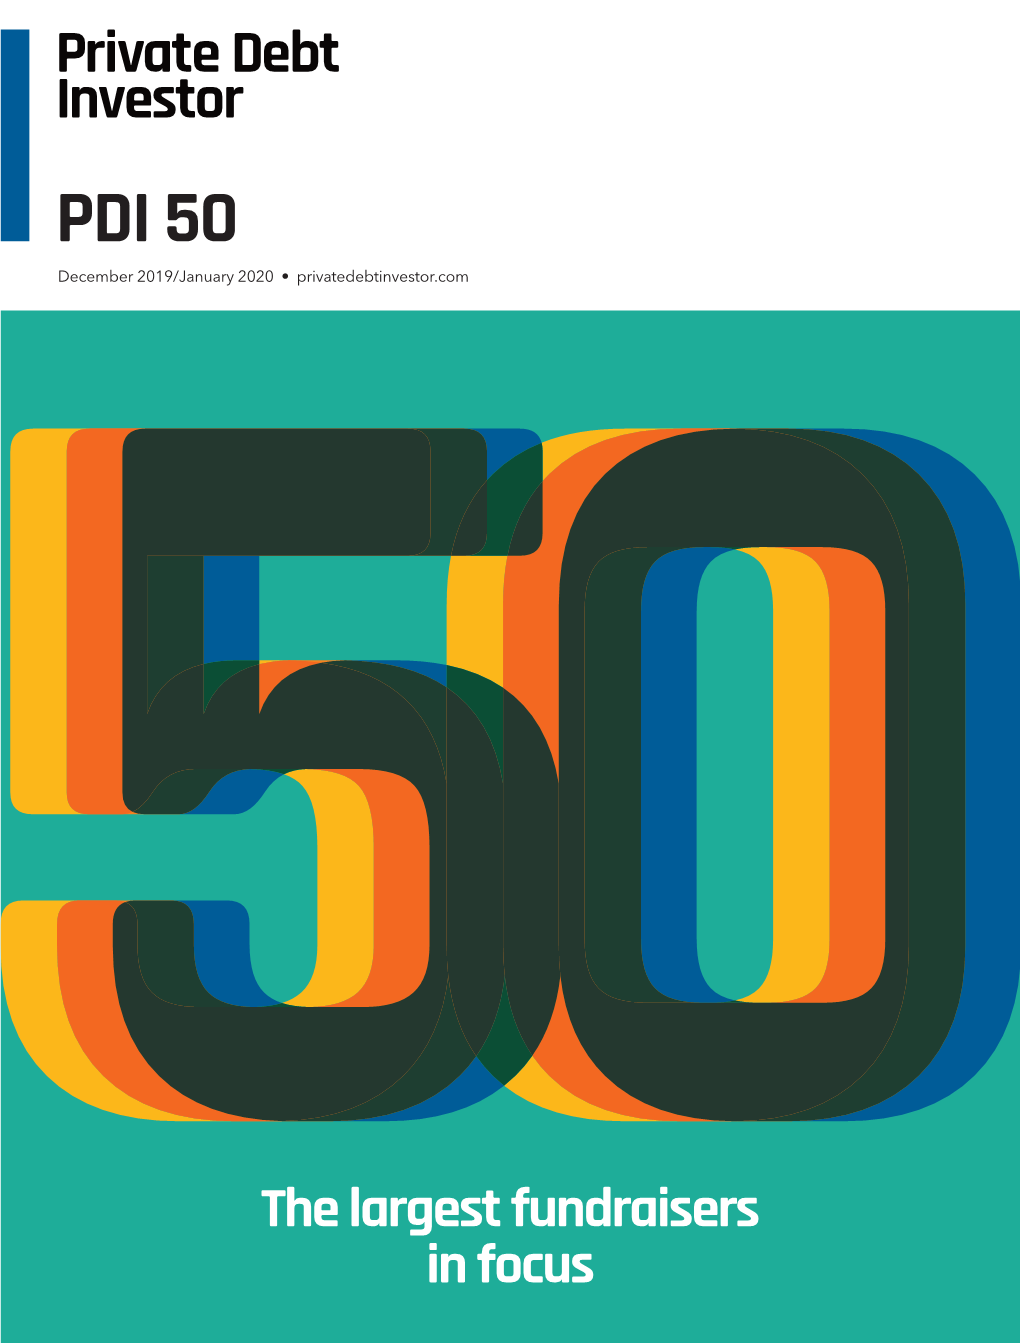 PDI 50 Understanding December 2019/January 2020 • Privatedebtinvestor.Com Private Debt in Europe